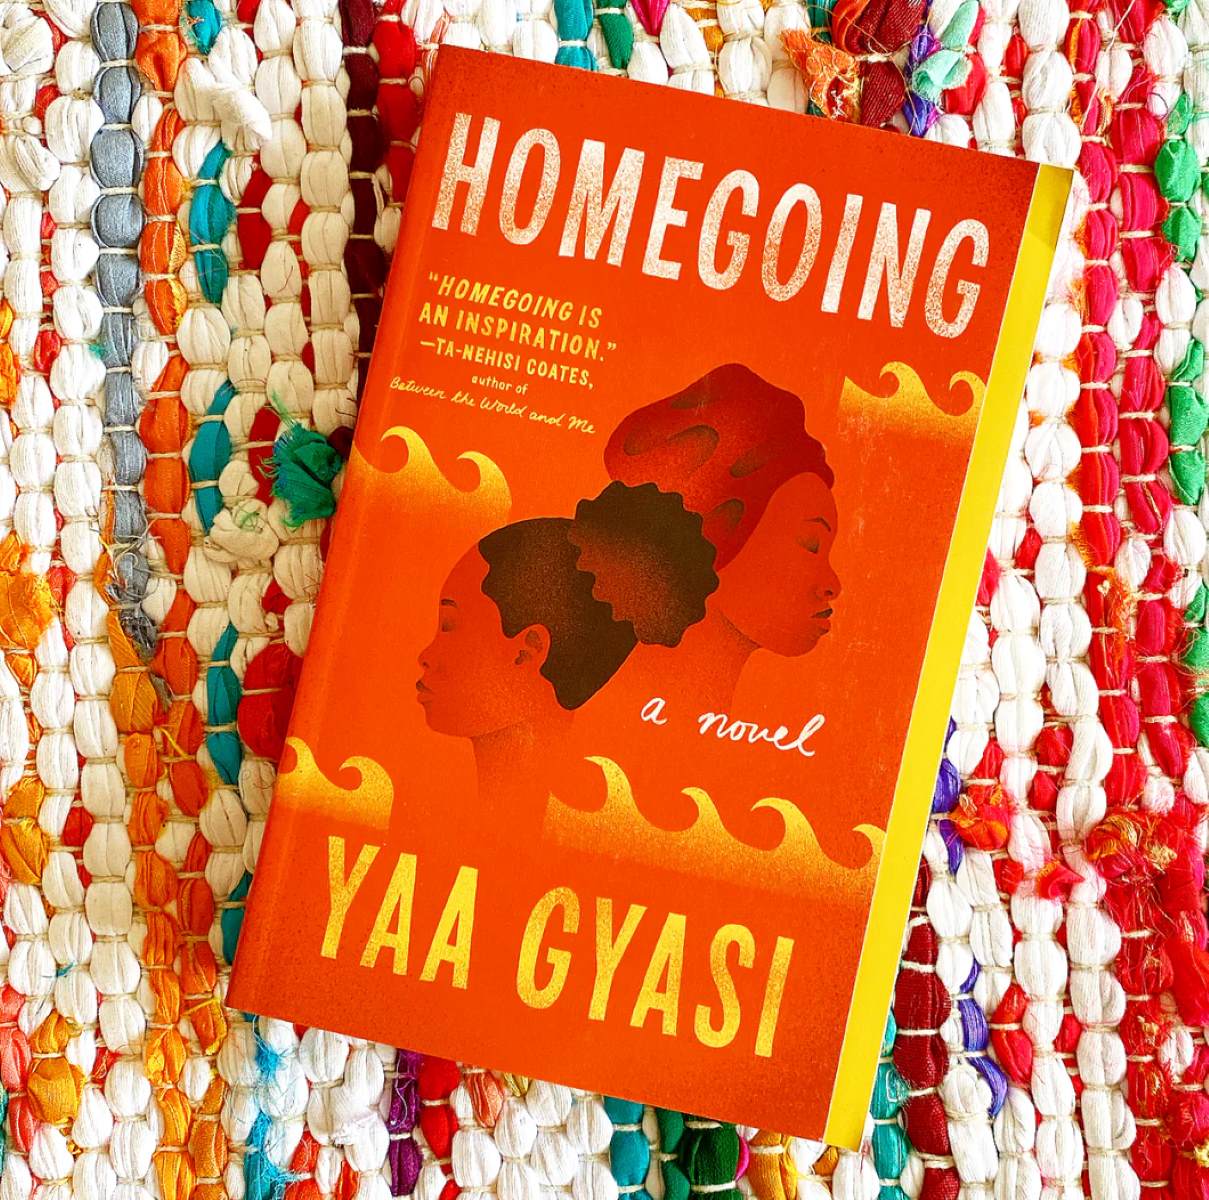 12-astounding-facts-about-homecoming-yaa-gyasi